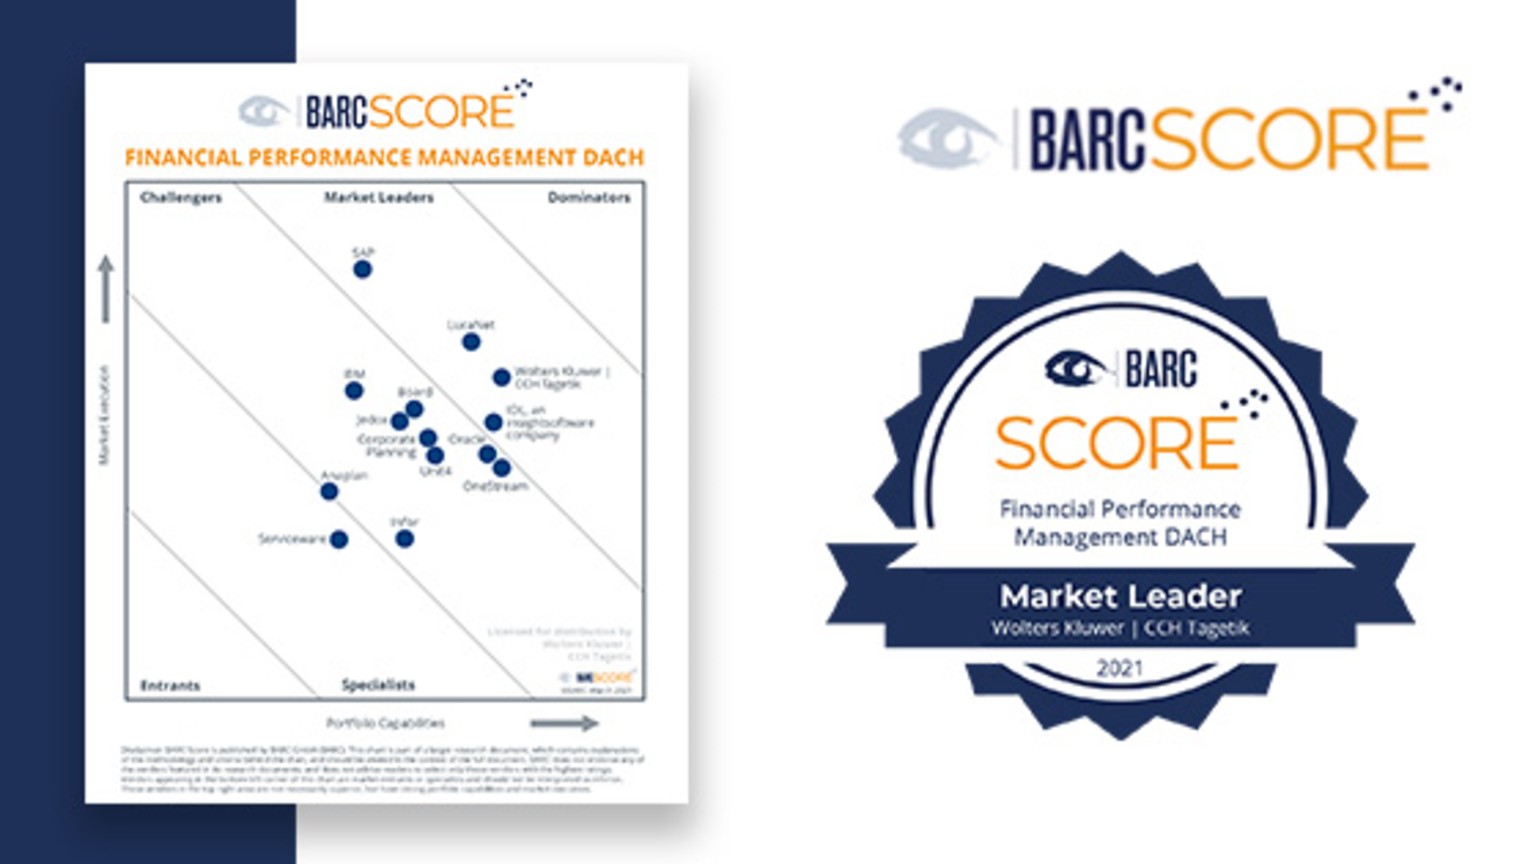 barc-score-financial-performance-dach-2021